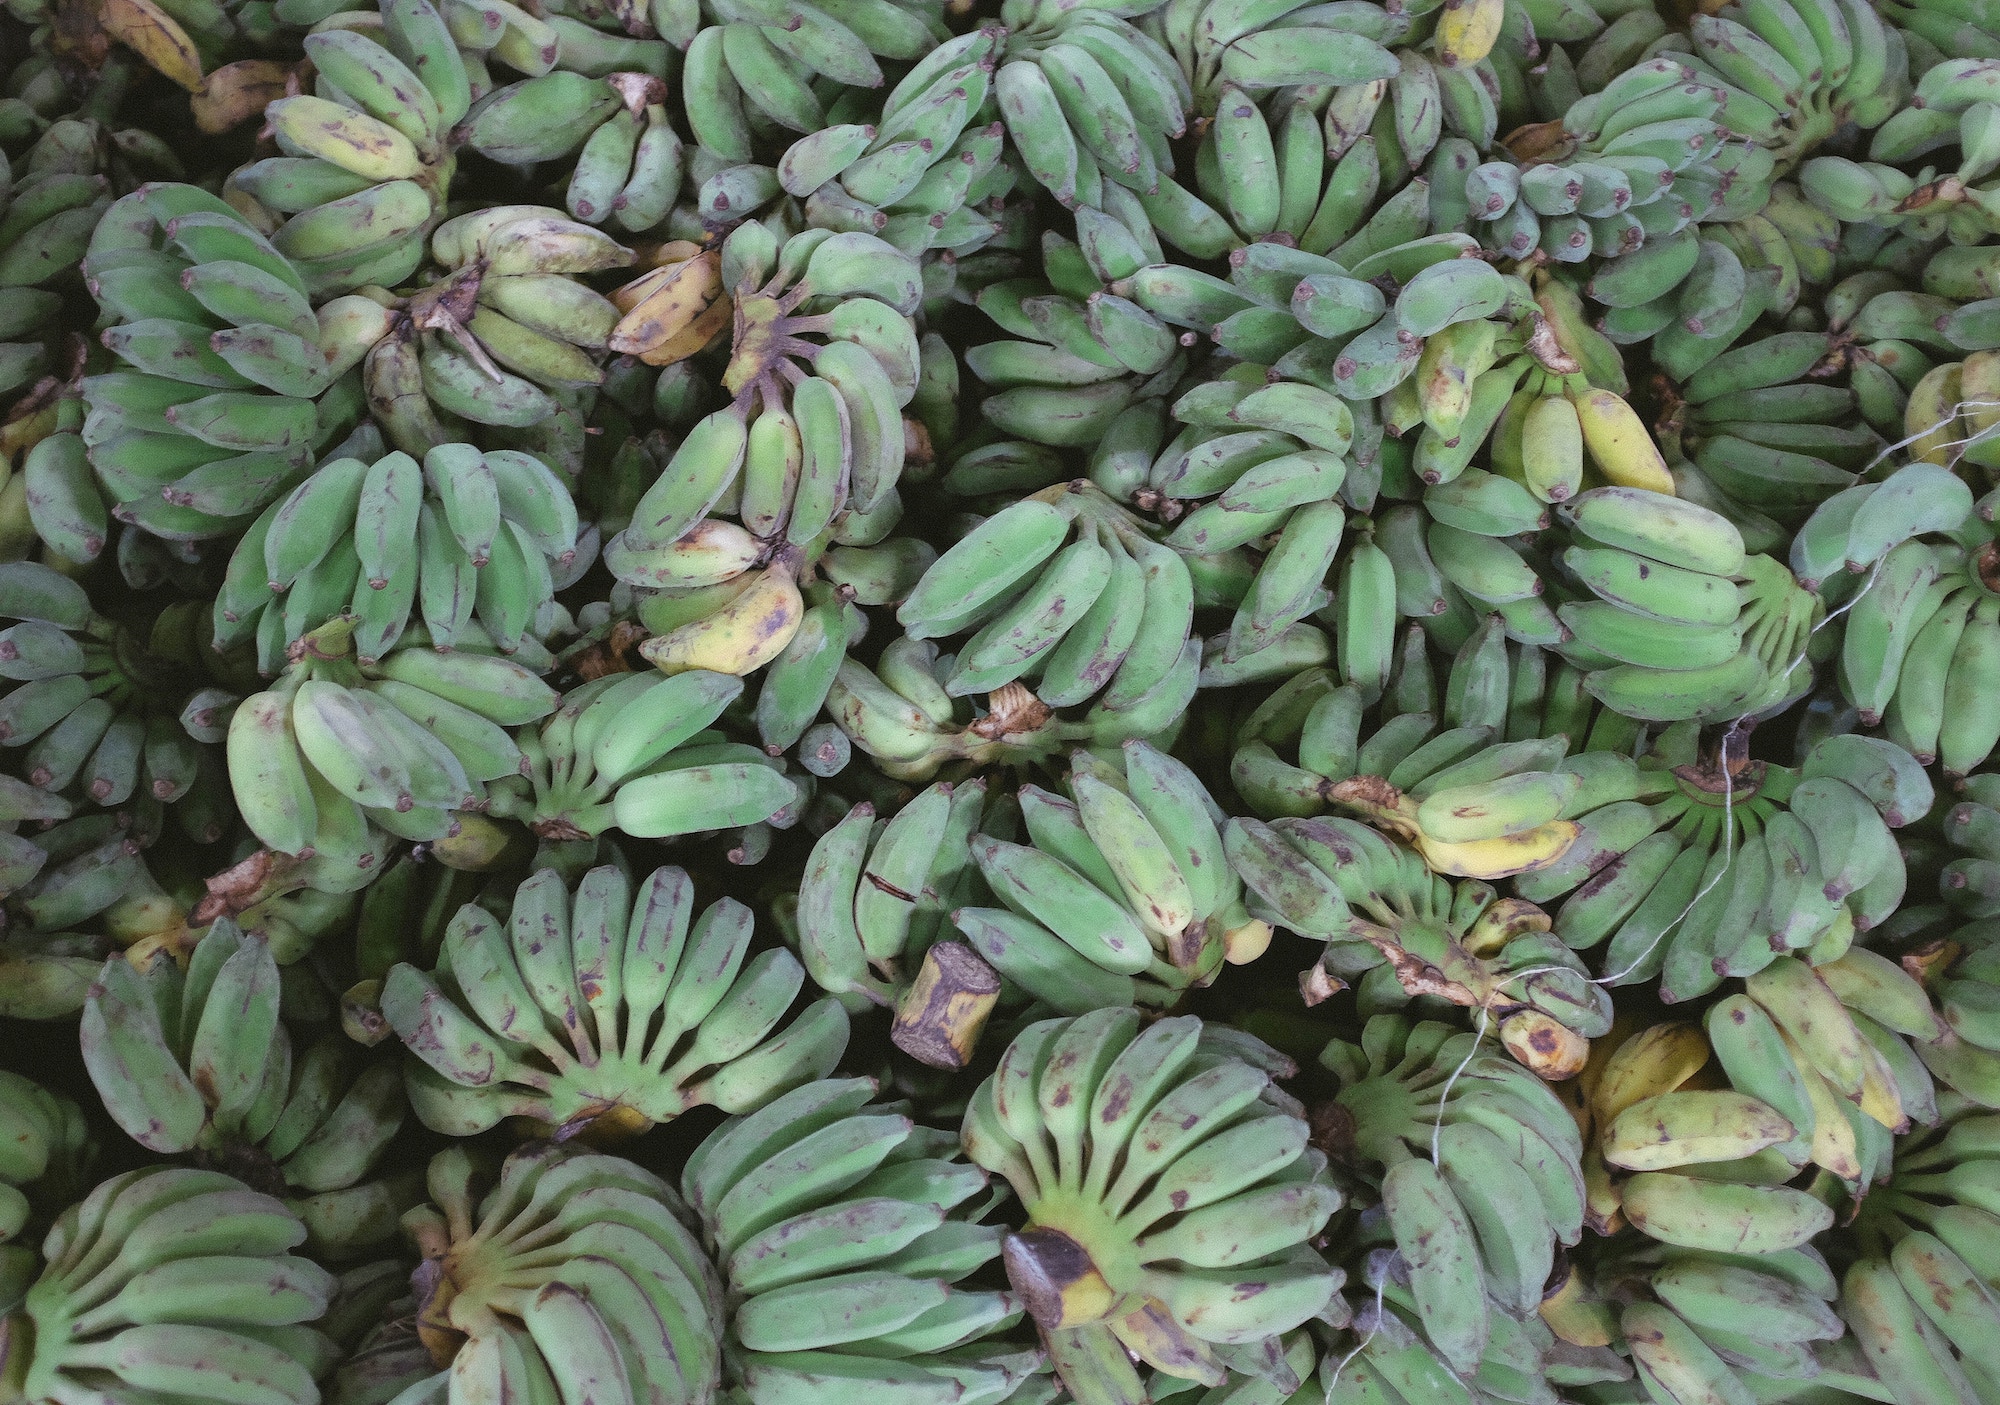 Hundreds of green bananas